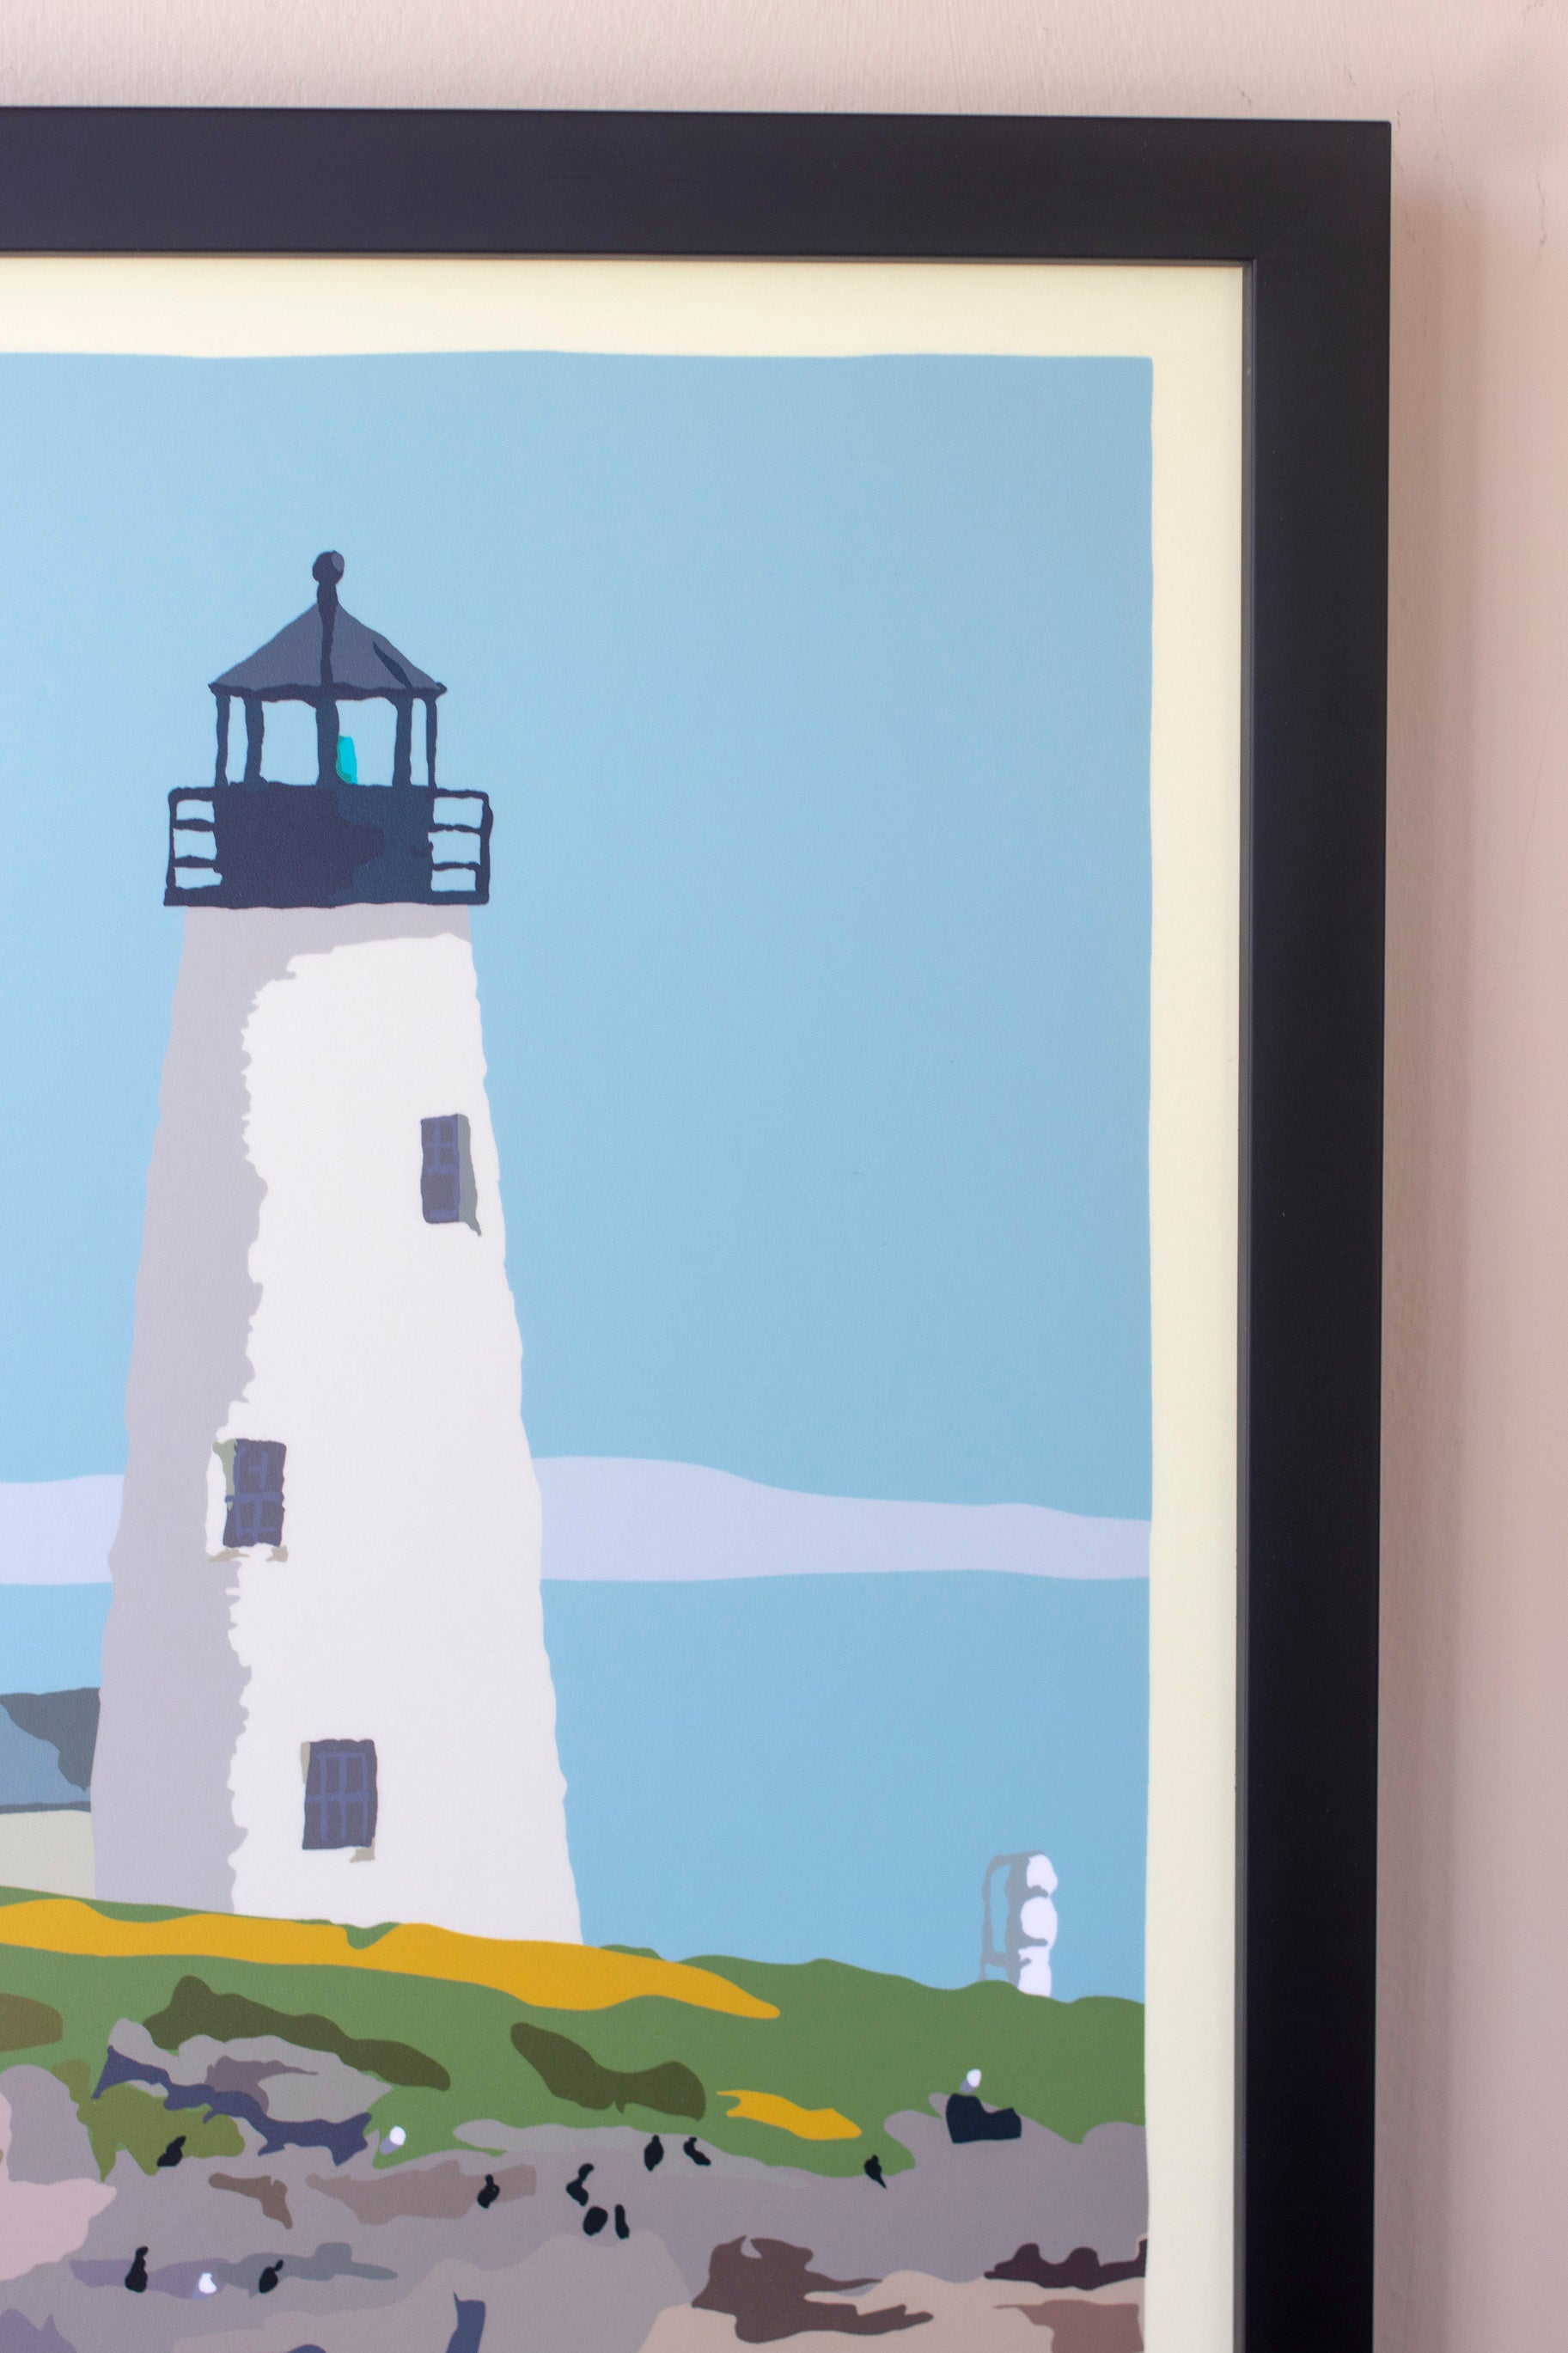 Wood Island Light Art Print 18" x 24" Horizontal Framed Wall Poster By Alan Claude - Maine